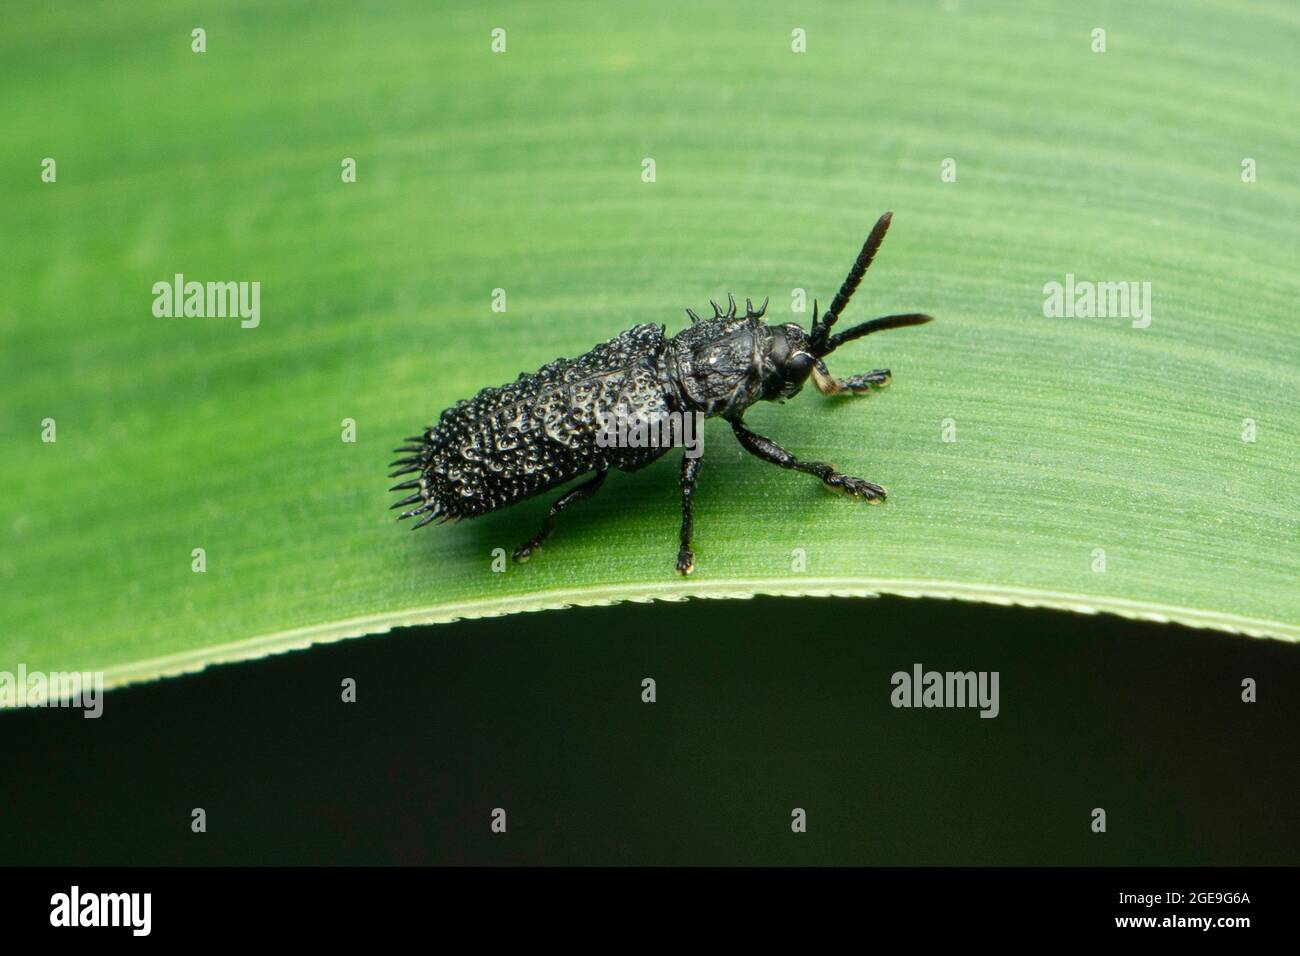 Black spiny beetle, leaf beetle also known by its common name rice hispa, Dicladispa armigera, Satara, Maharashtra, India Stock Photo